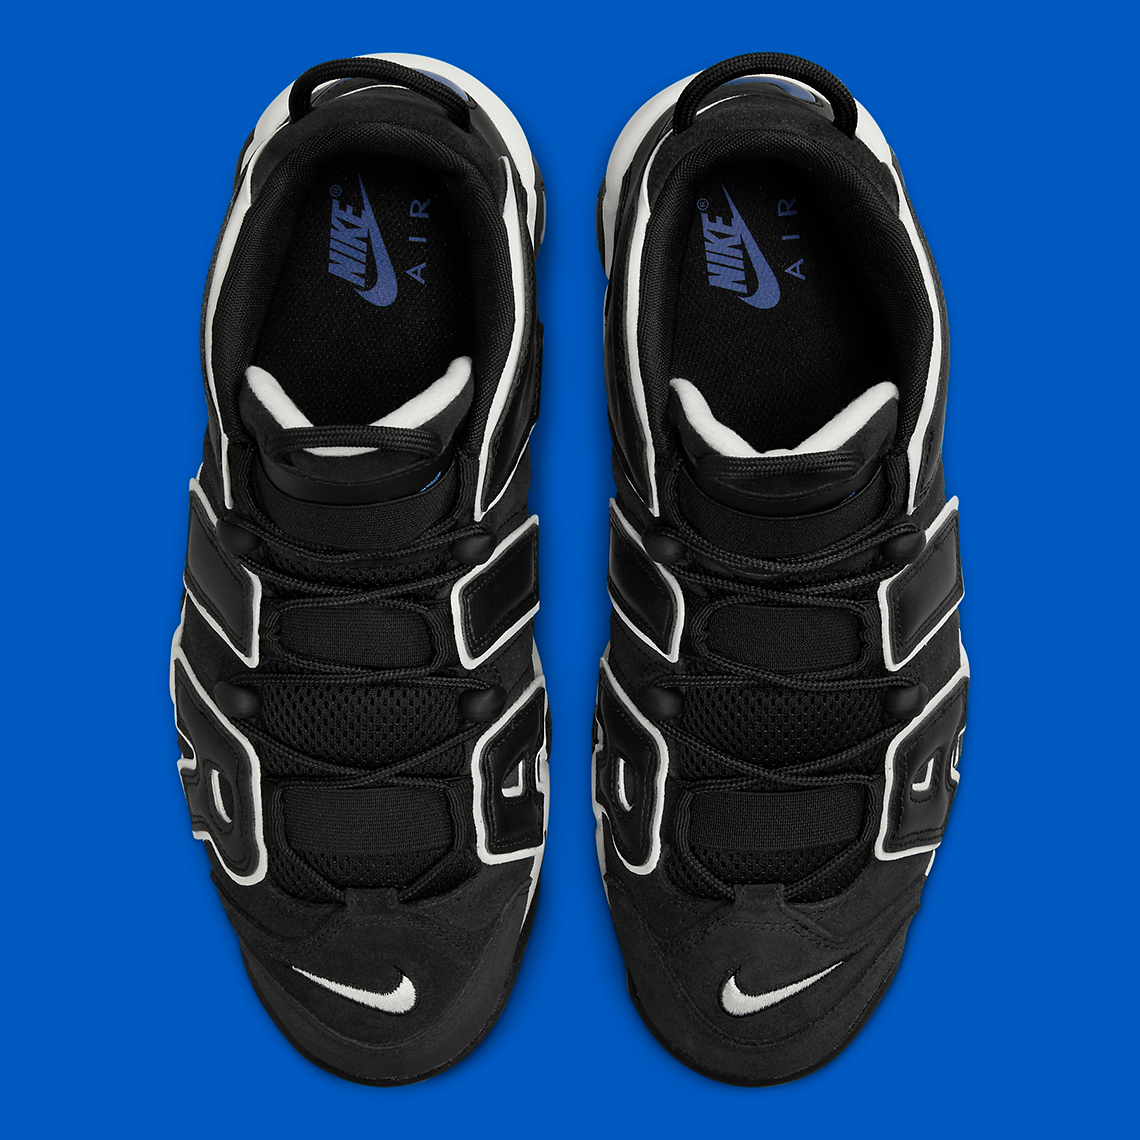 Nike nike leopard running sneakers Black Royal Fb8883 001 6